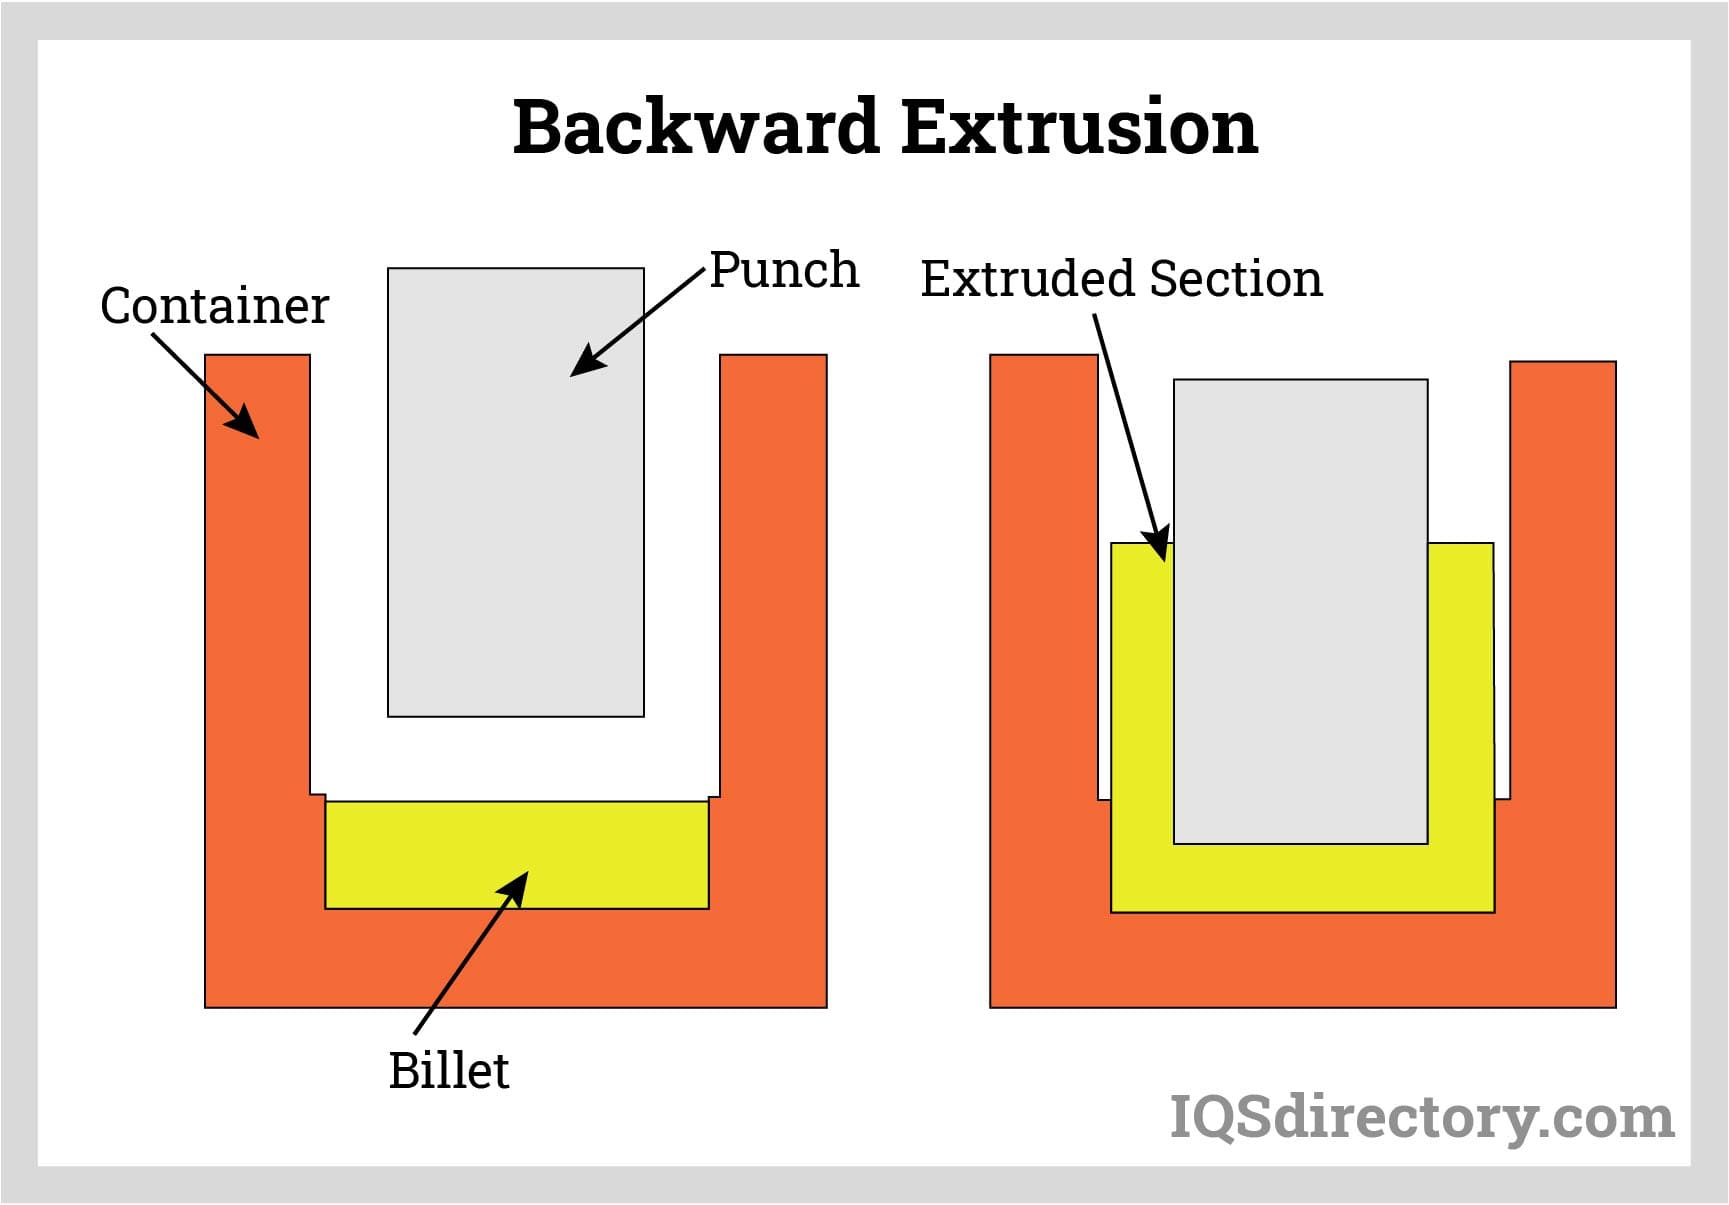 Backward Extrusion